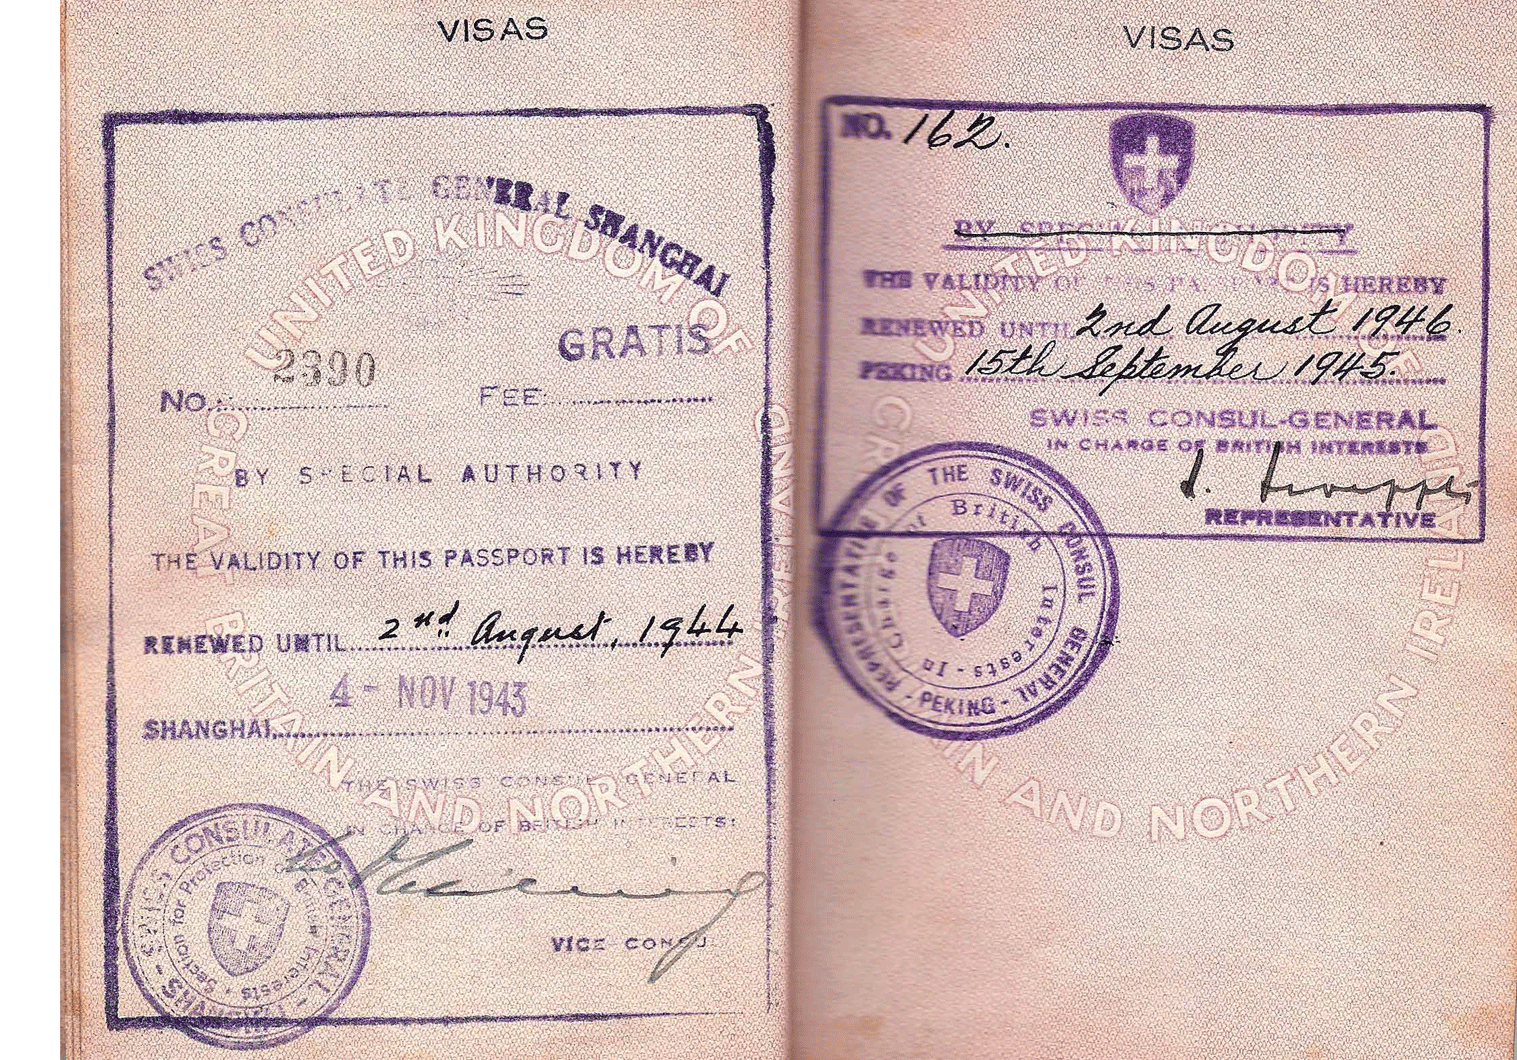 WW2 Swiss protection visa